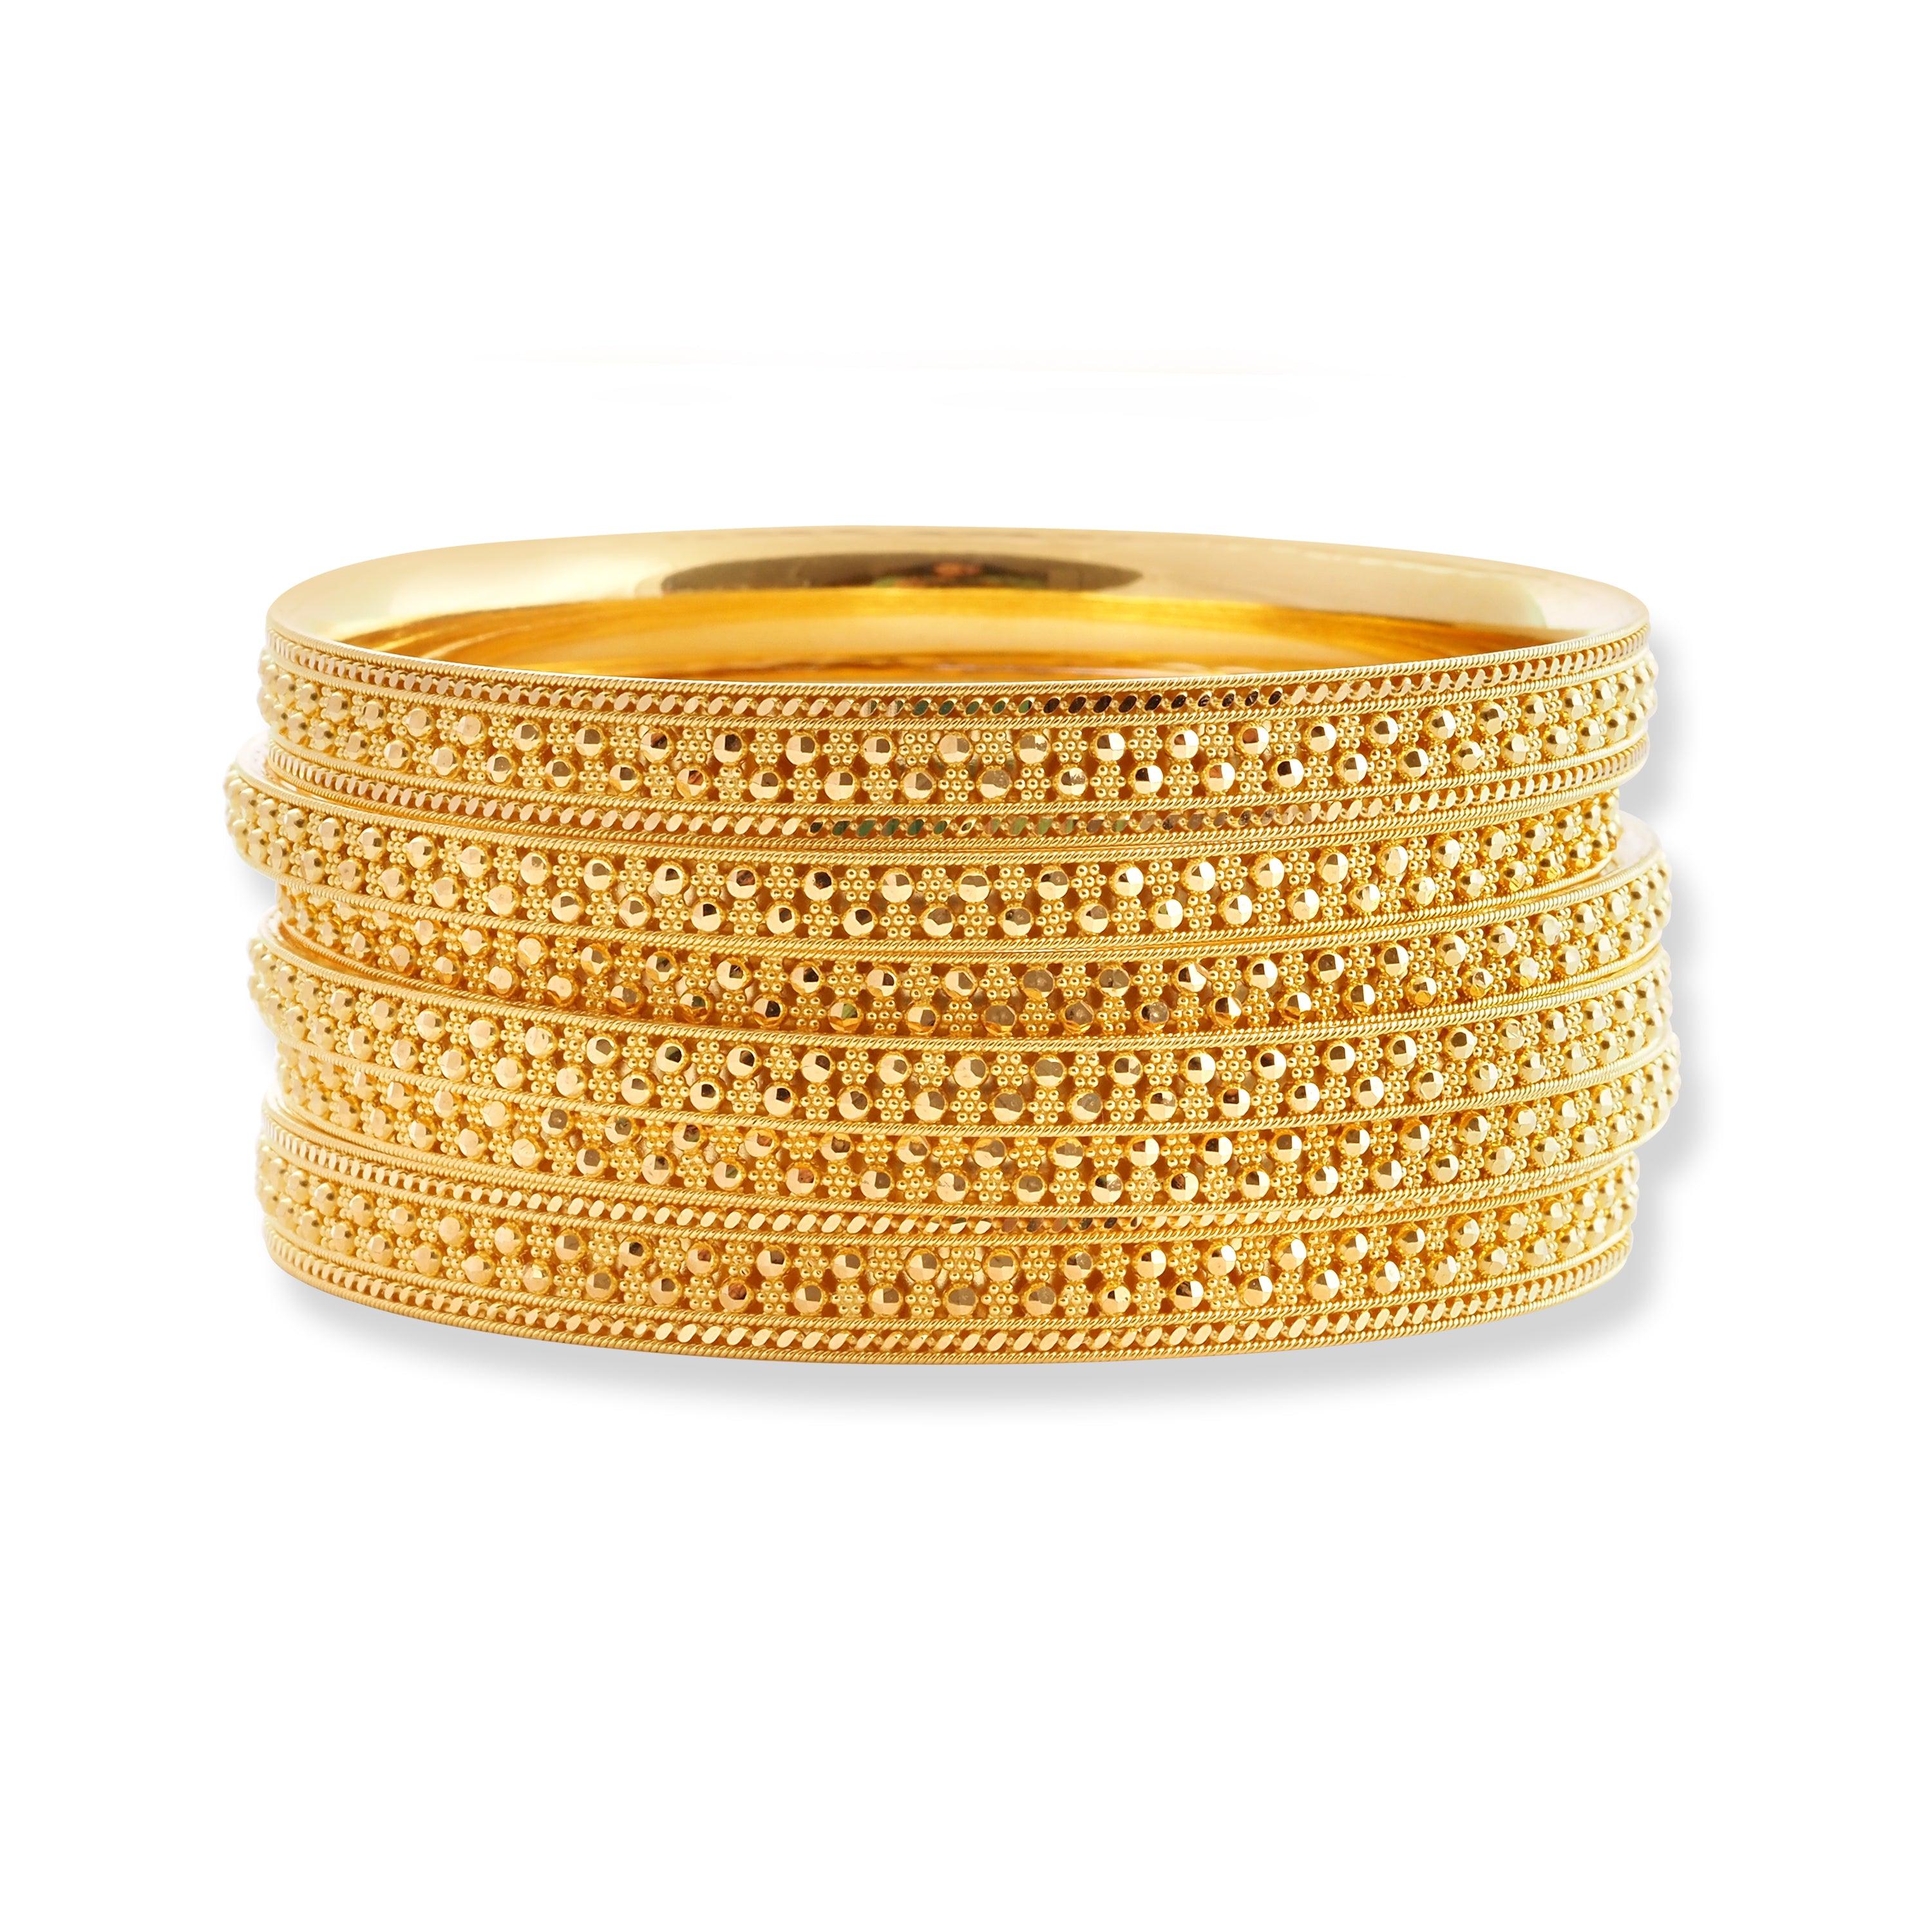 Set of Six 22ct Gold Bangles with Diamond Cut Design and Filigree Work B-8577 - Minar Jewellers